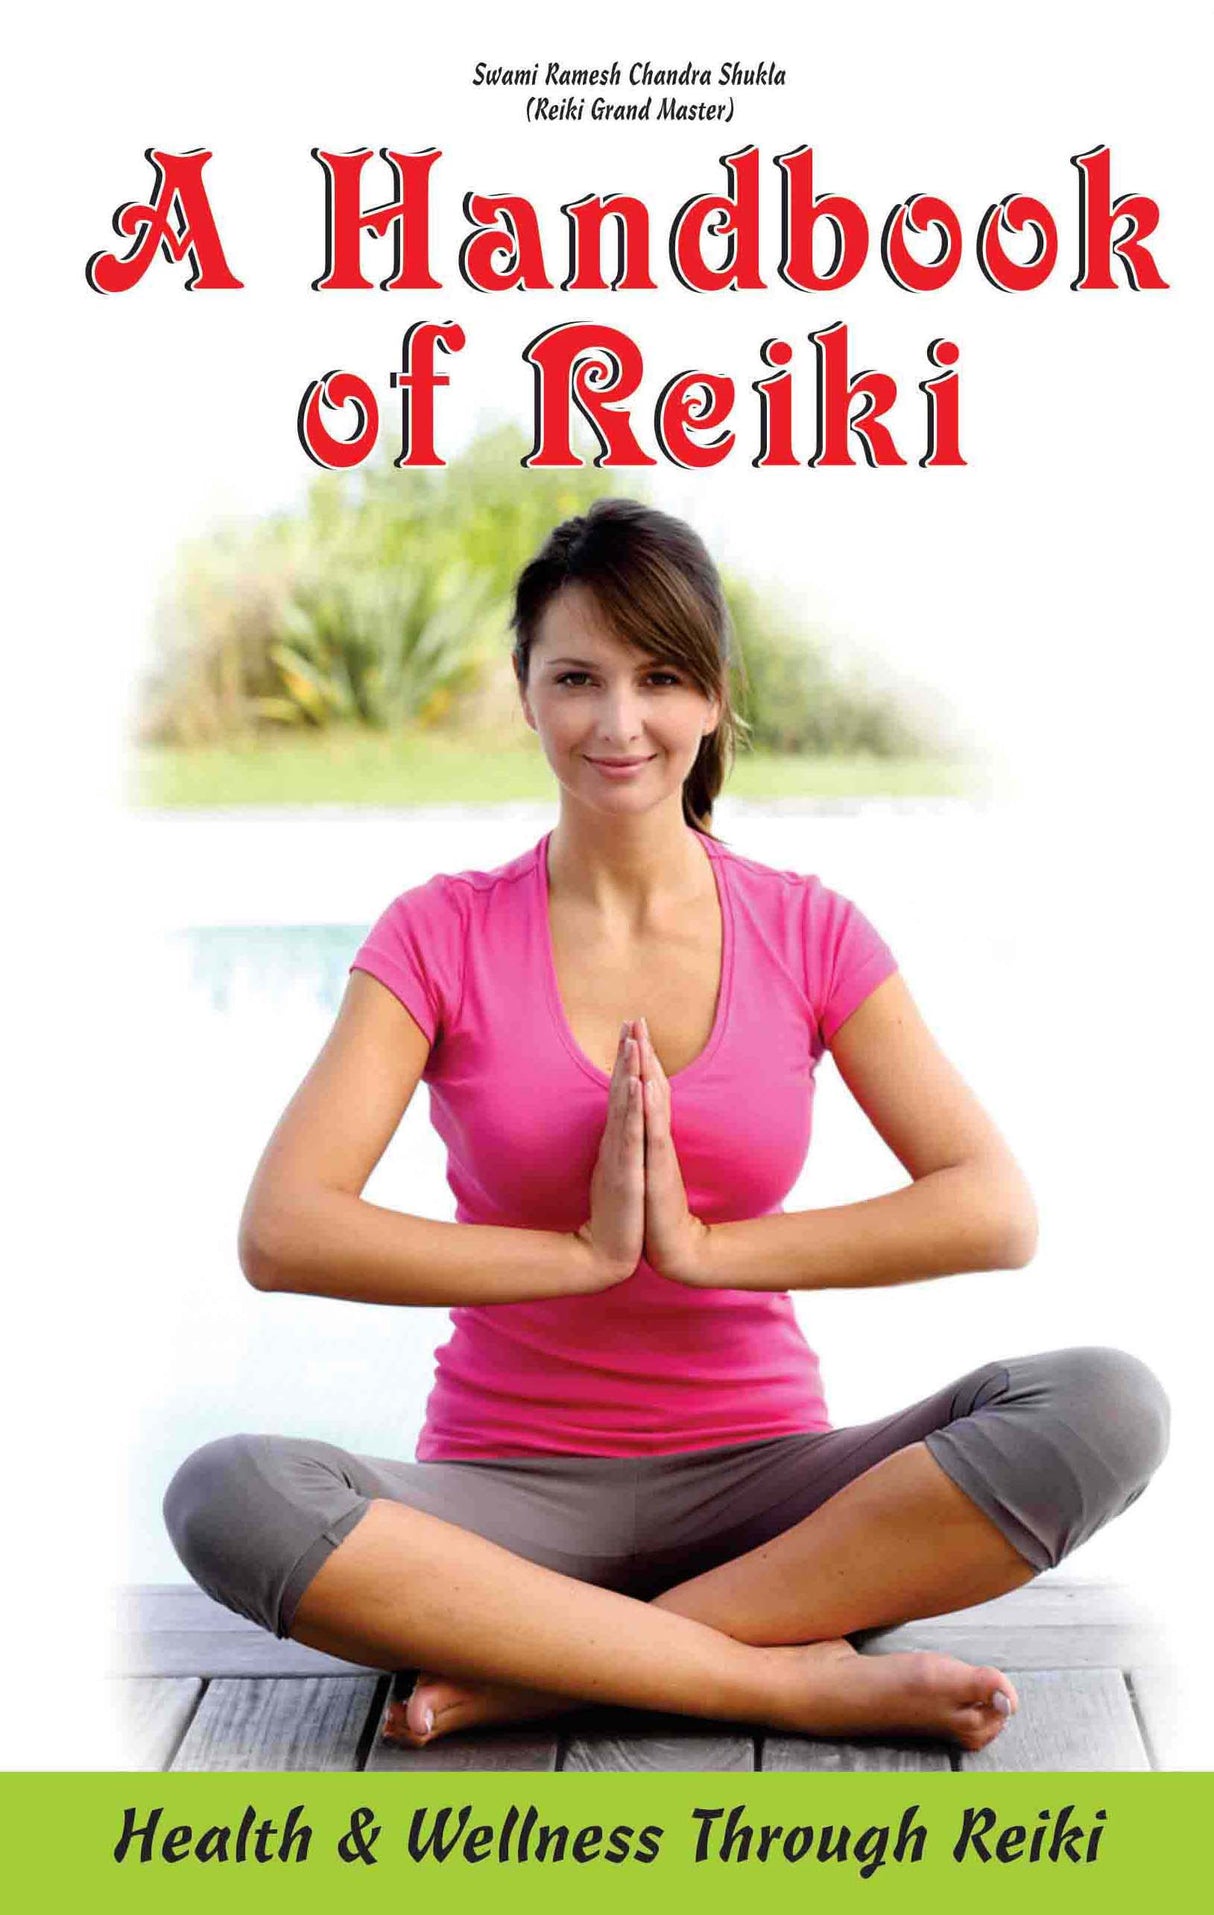 A Handbook of Reiki: Health & Wellness Through Reiki